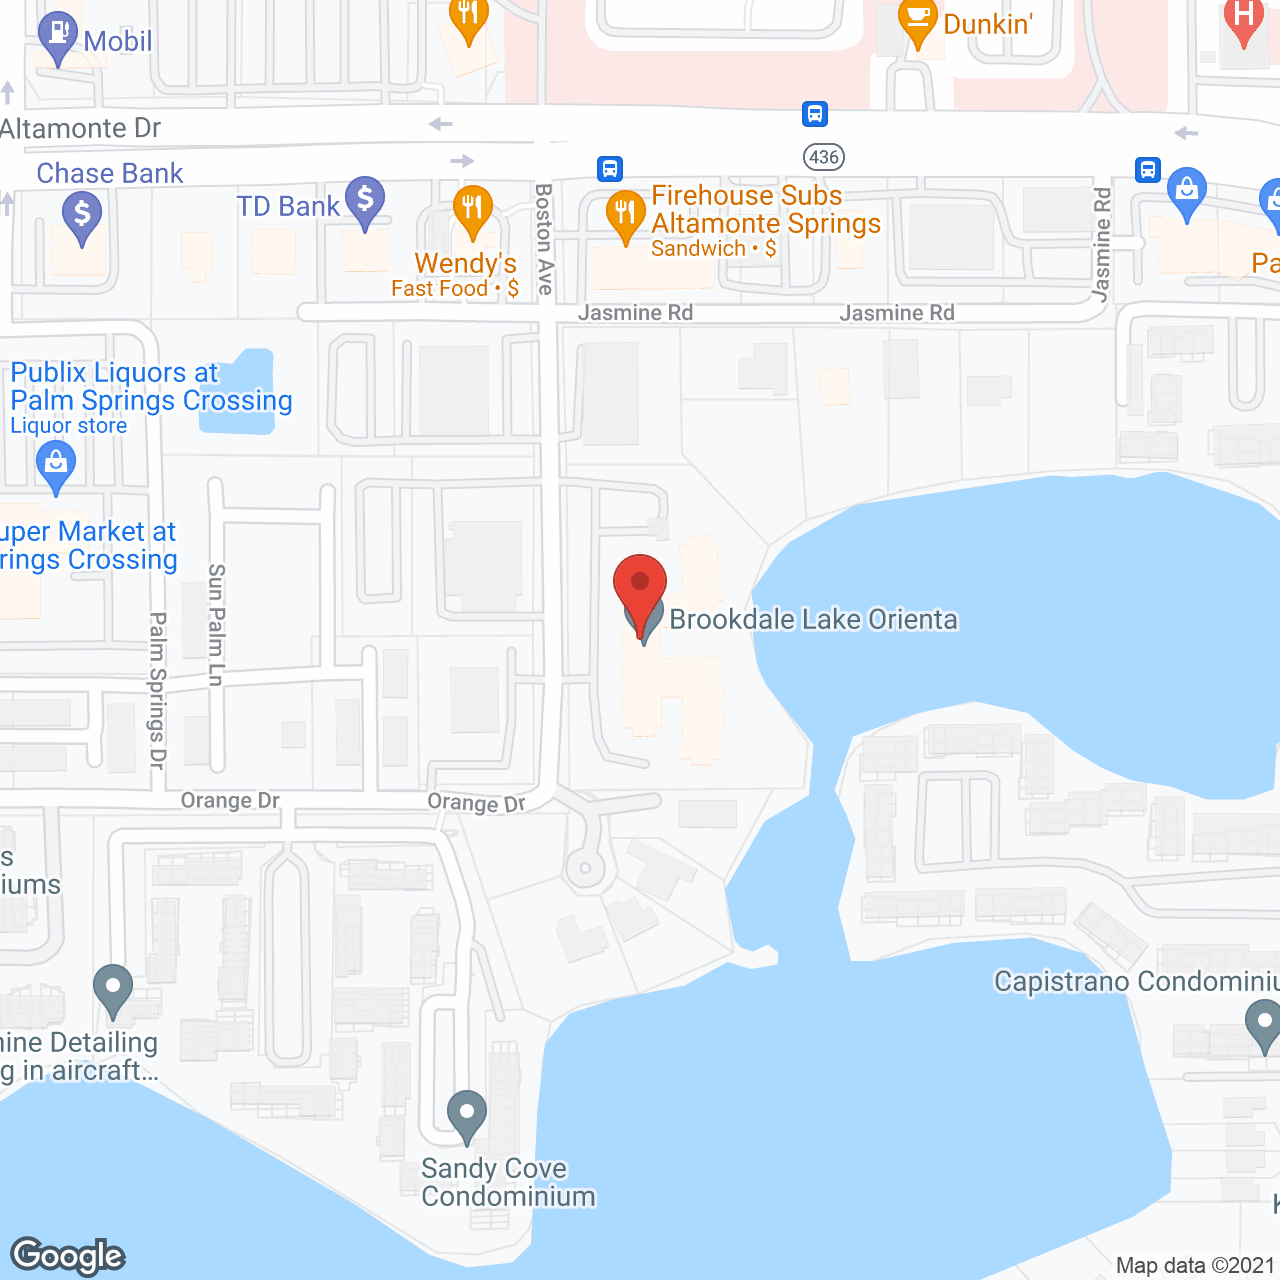 Brookdale Lake Orienta in google map